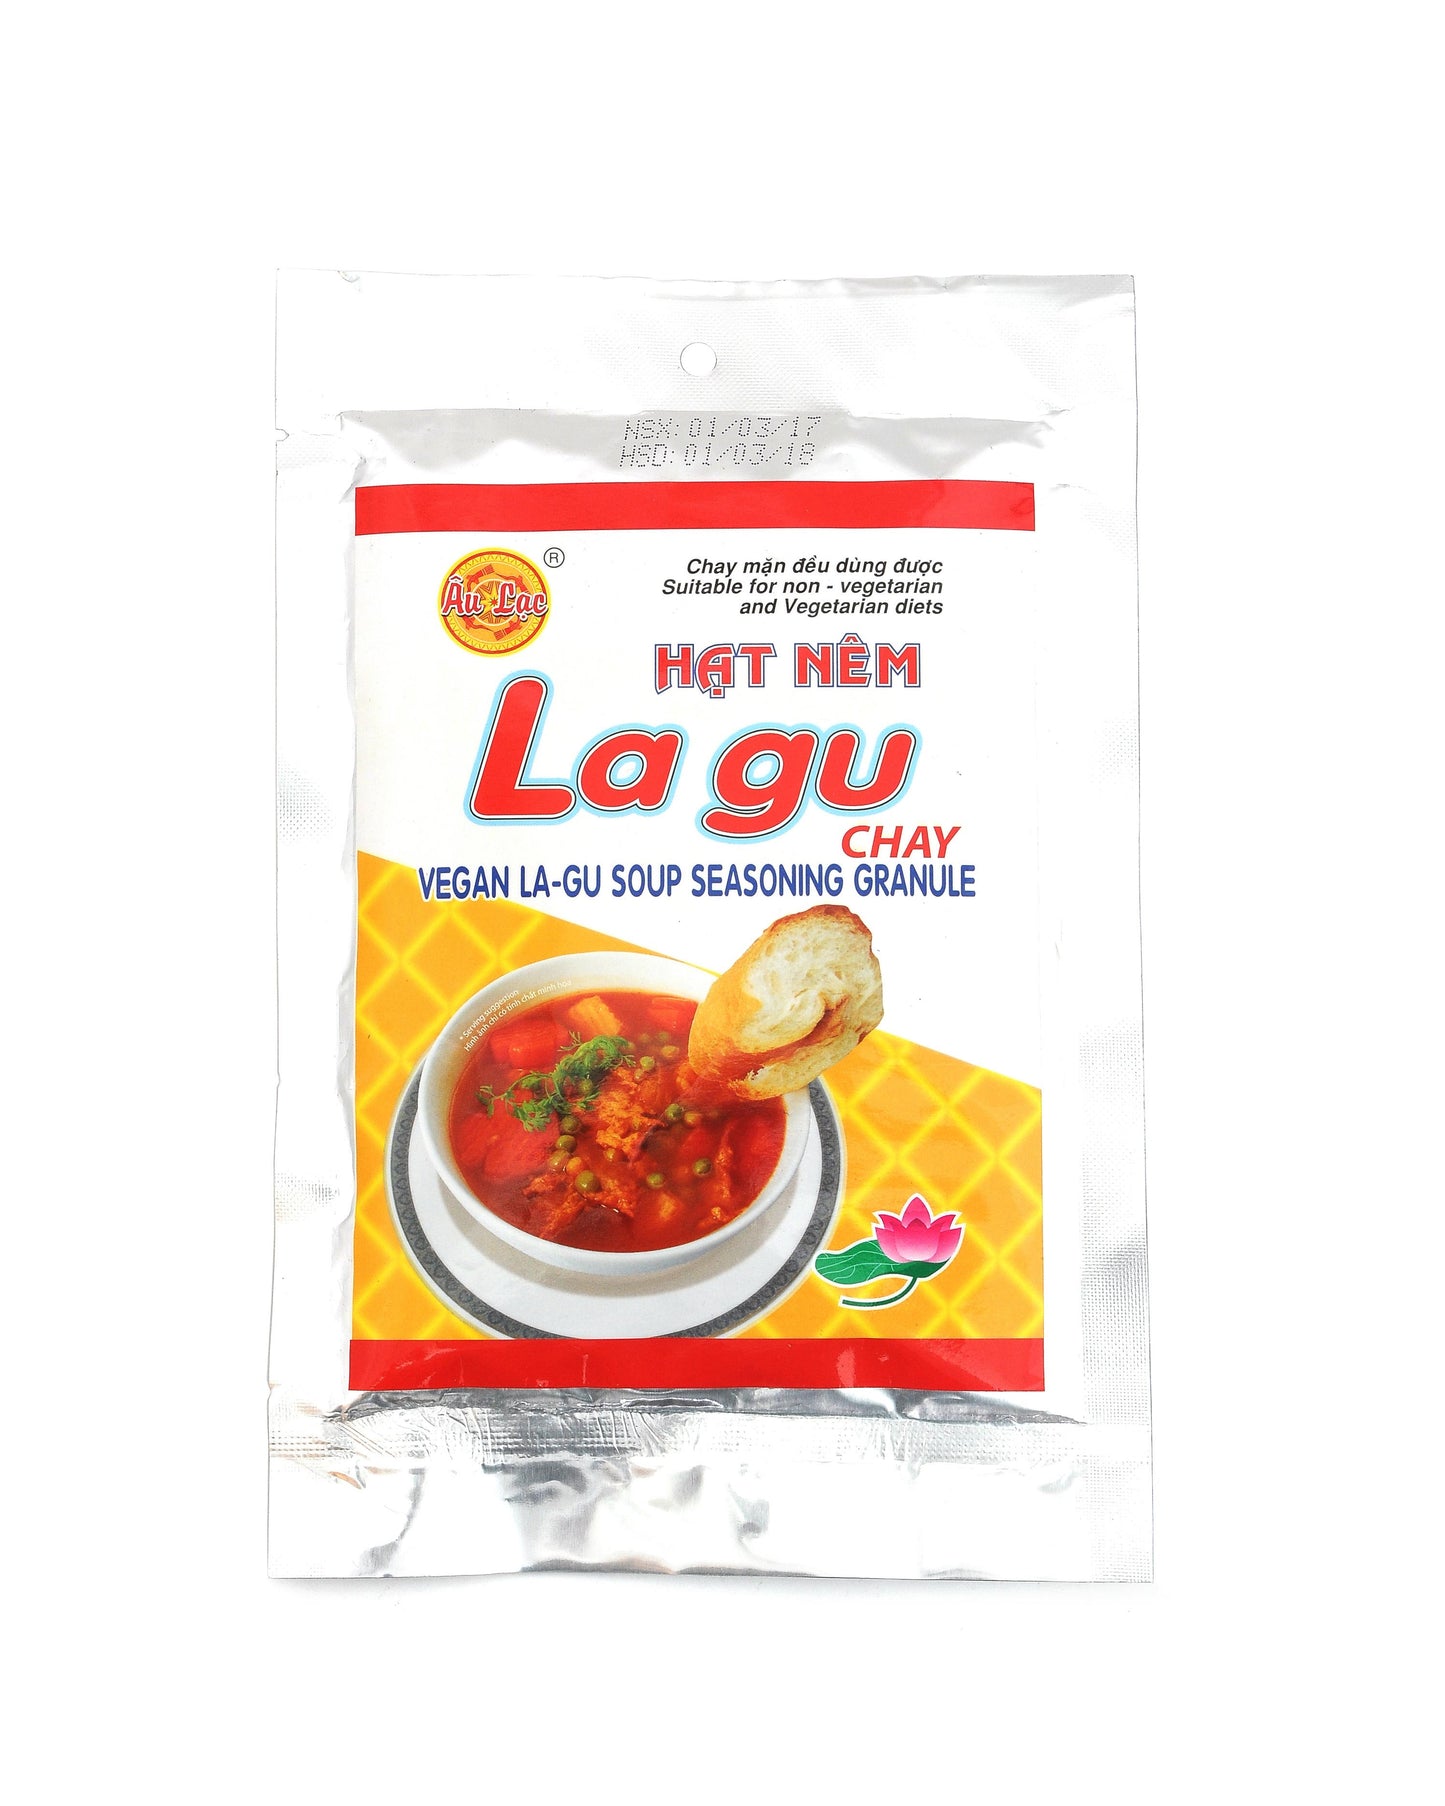 Au Lac Vegan La-gu Soup Seasoning Granule - Suitable For Both Vegetarians And Non-vegetarians.